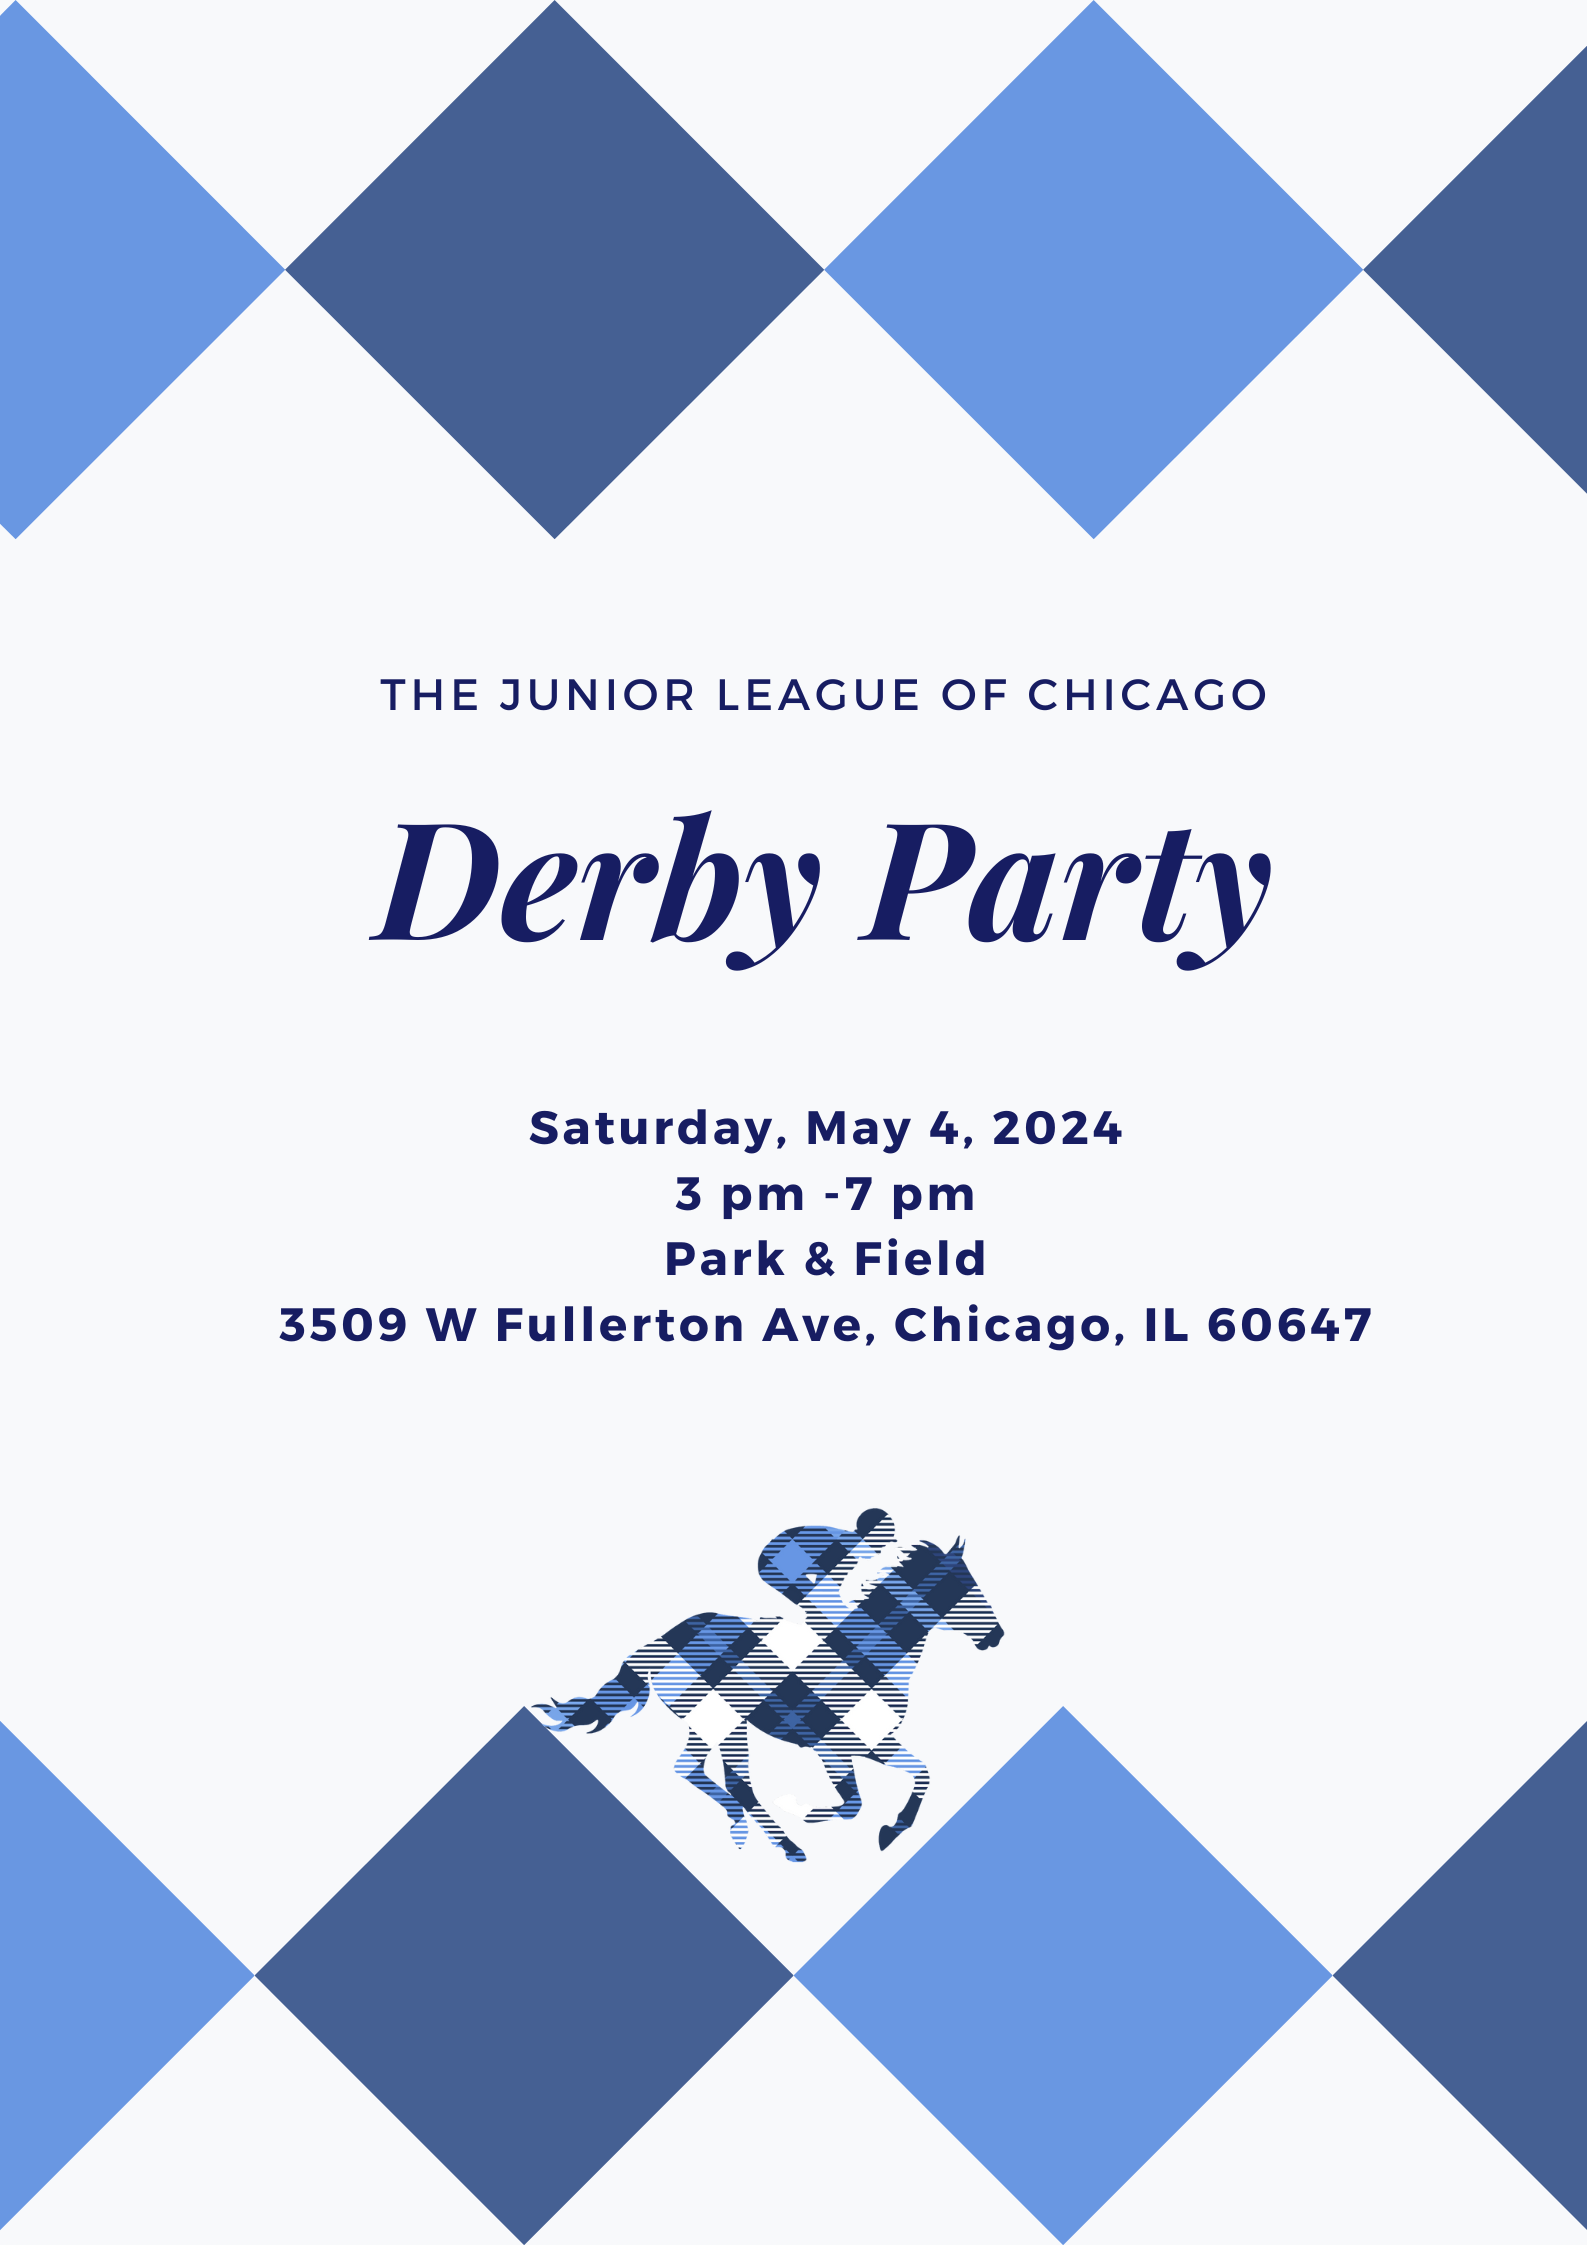 JLC Derby Party Details